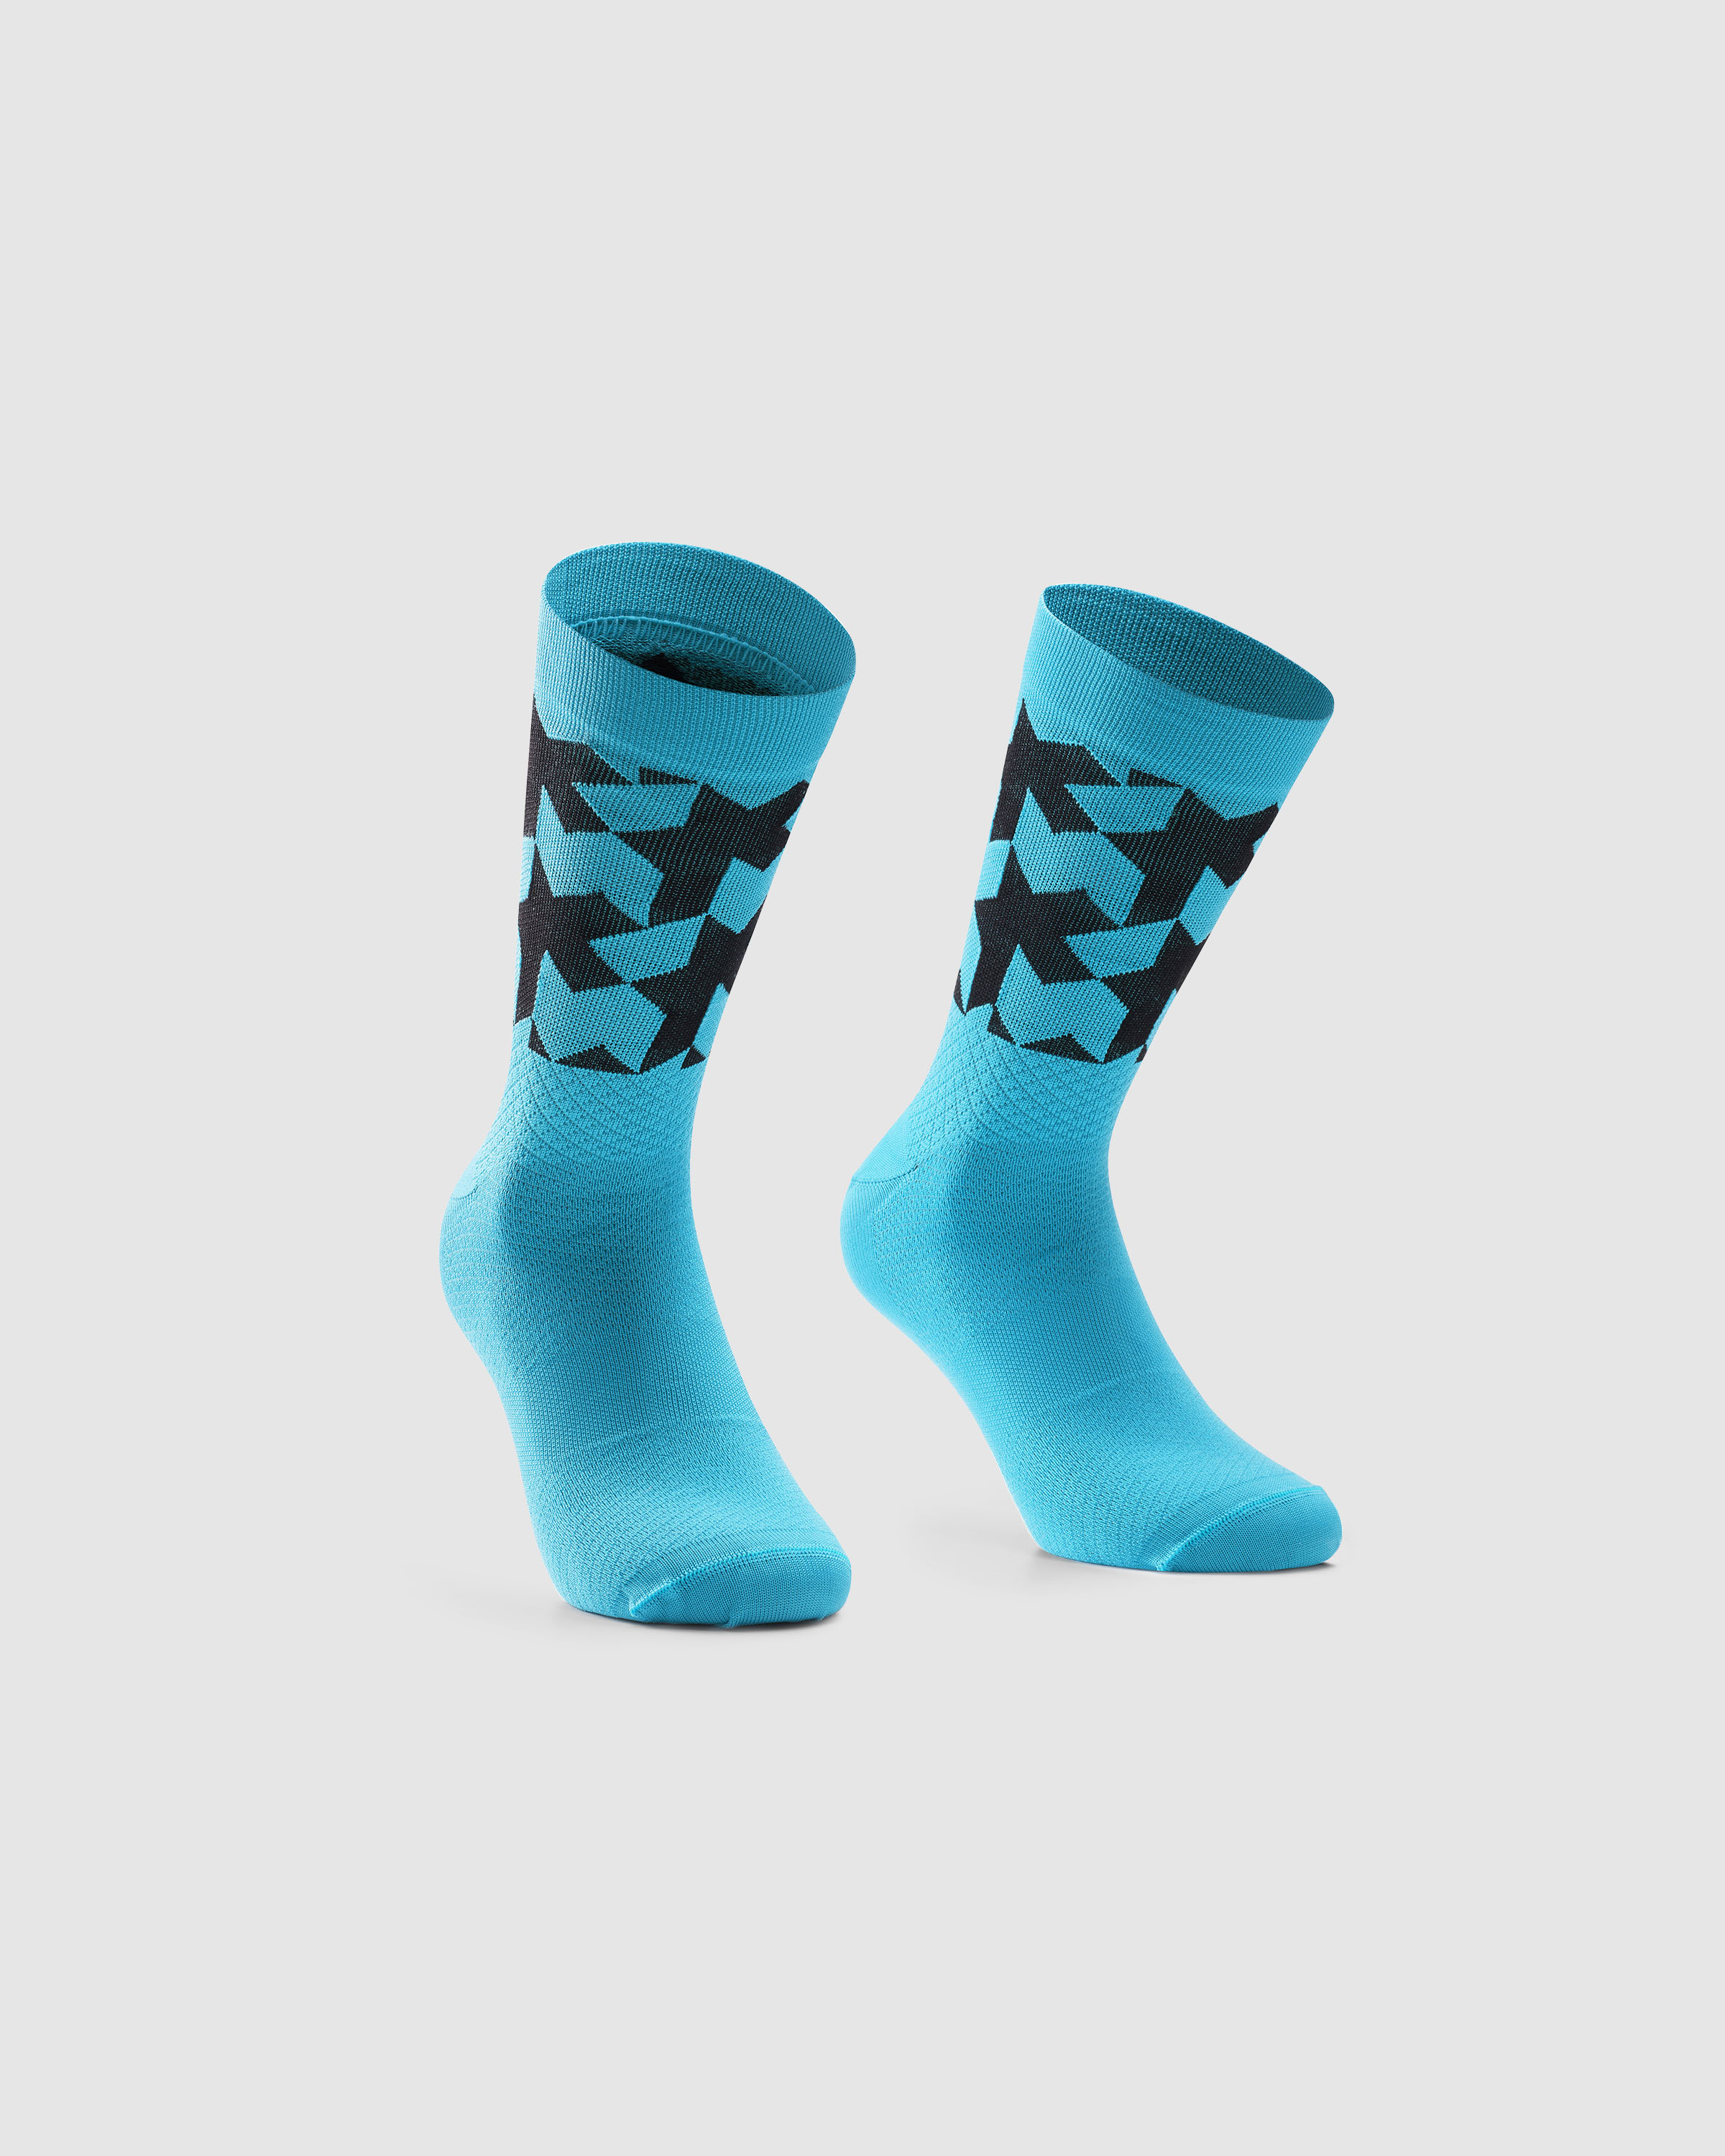 ASSOSOIRES Monogram Socks EVO - ASSOS Of Switzerland - Official Outlet